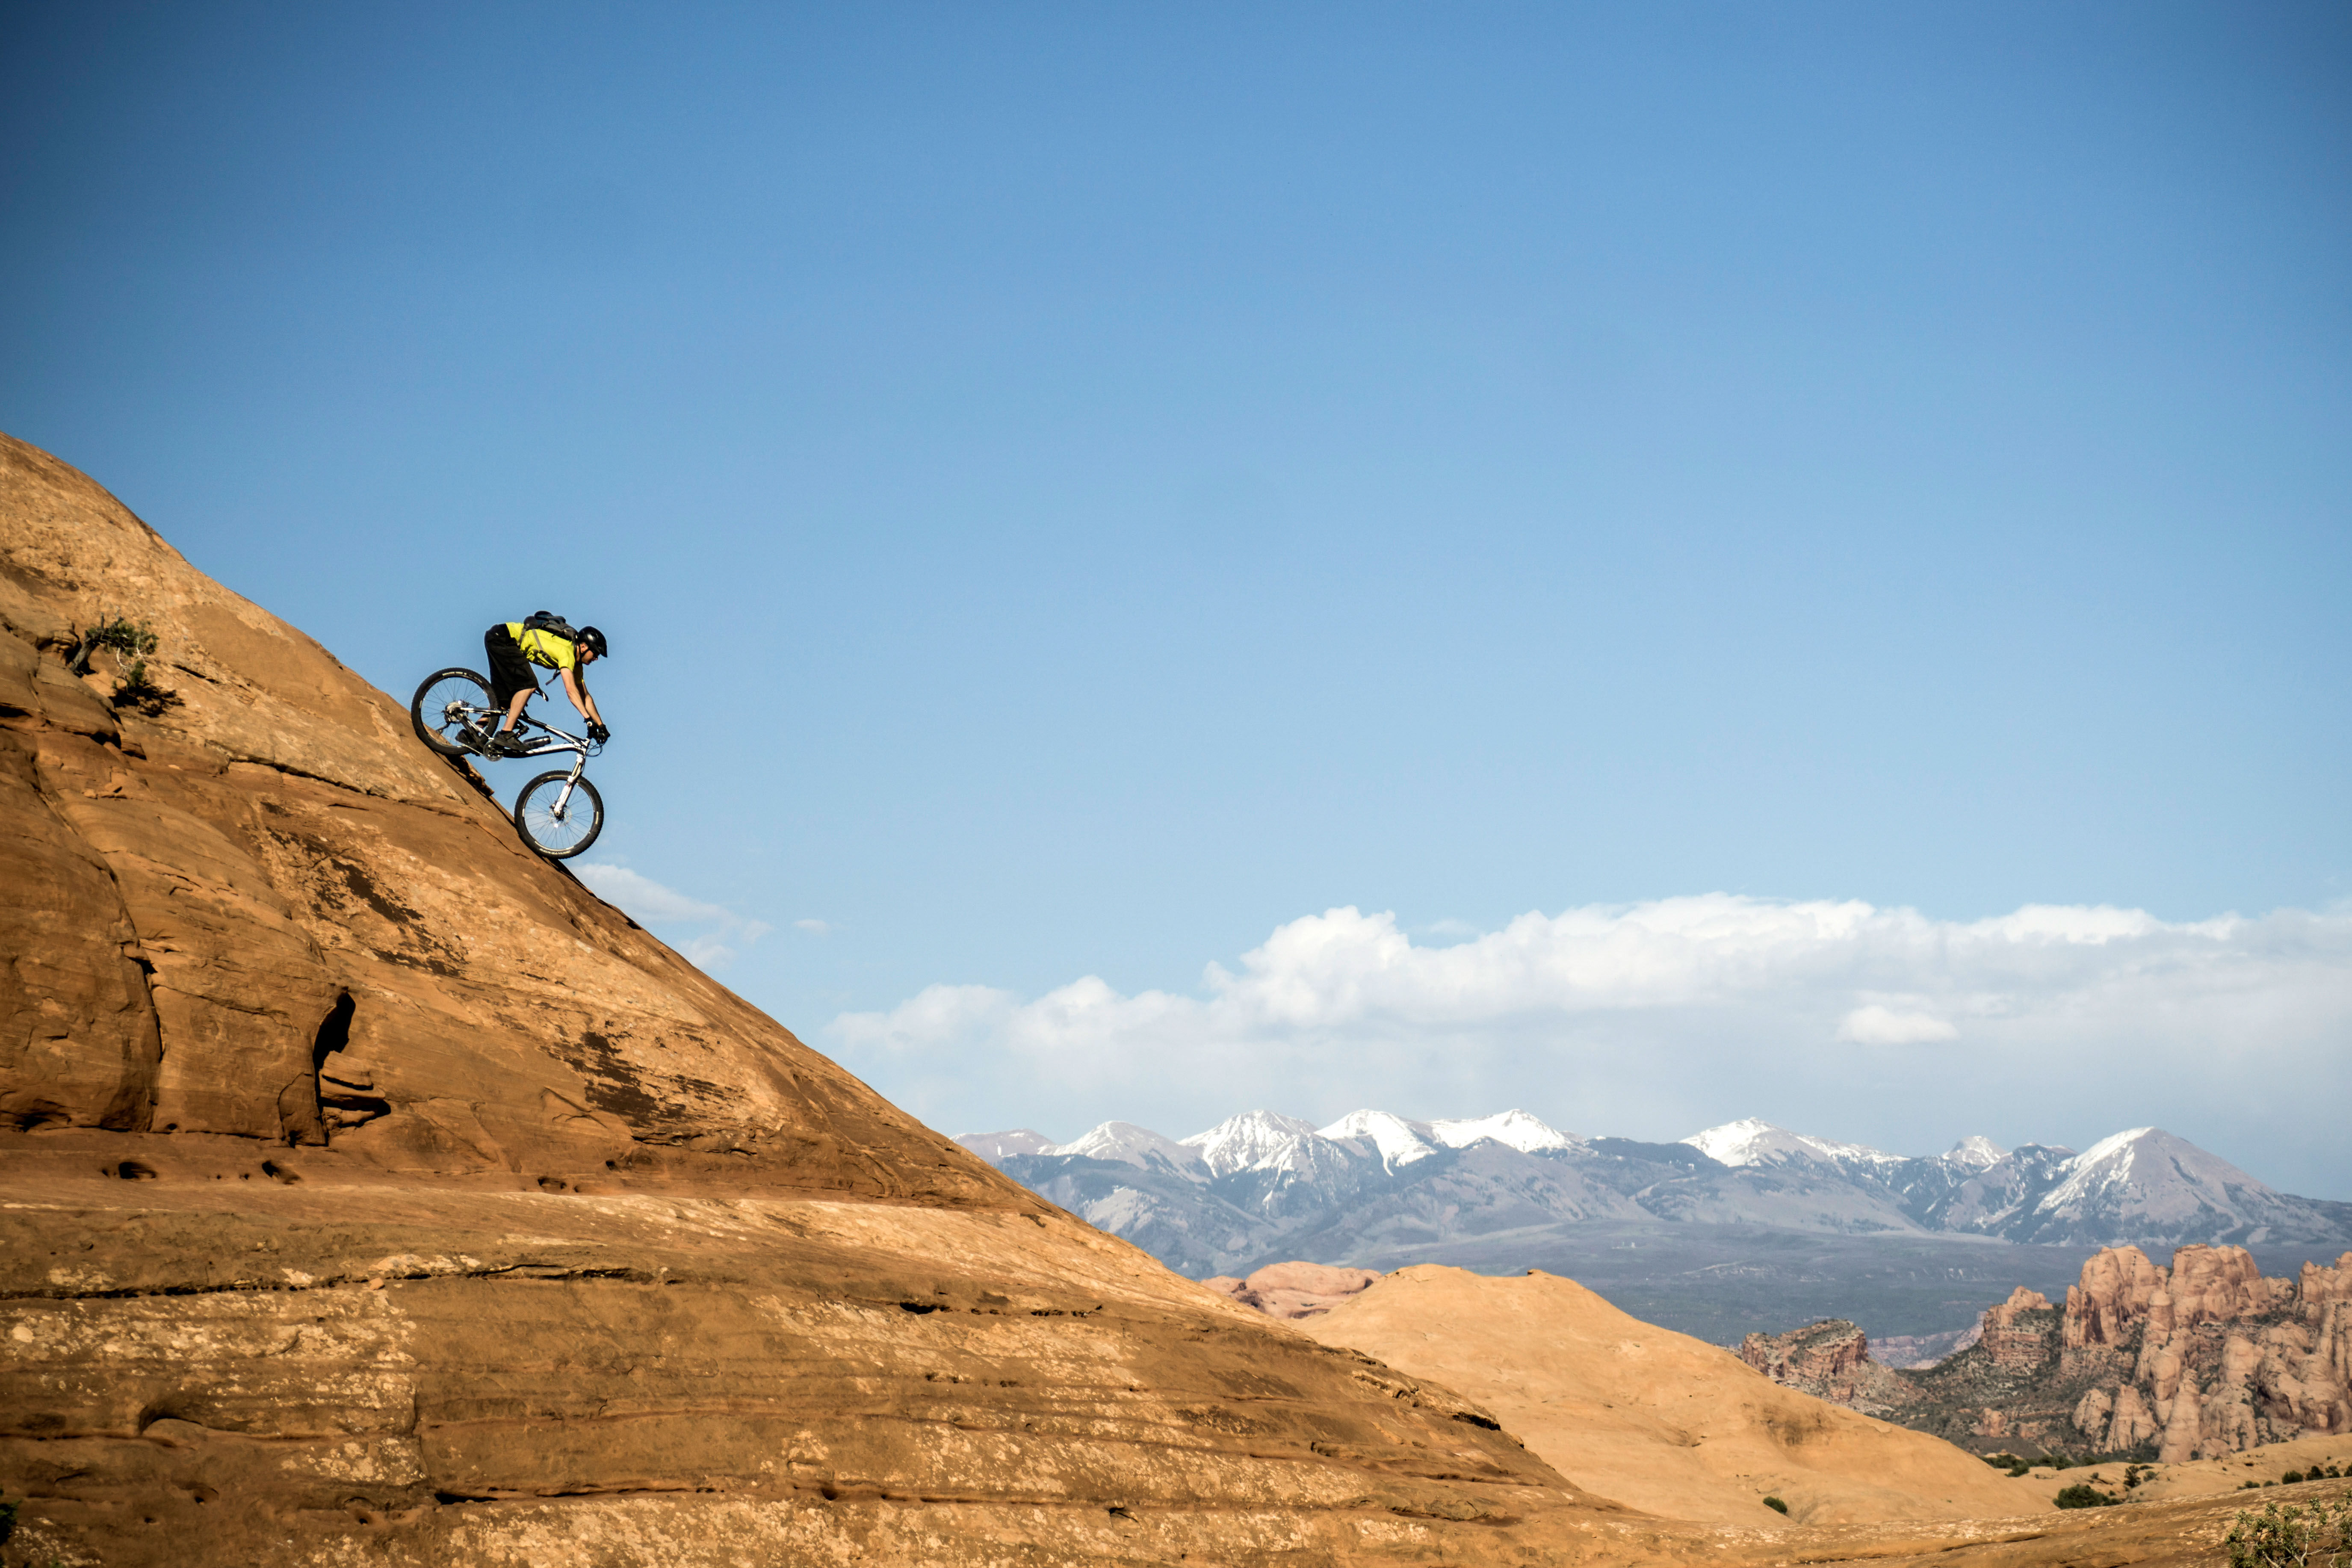 A mountain biker riding Utah’s famous slickrock trails. Image by Jordan Siemens / Taxi / Getty